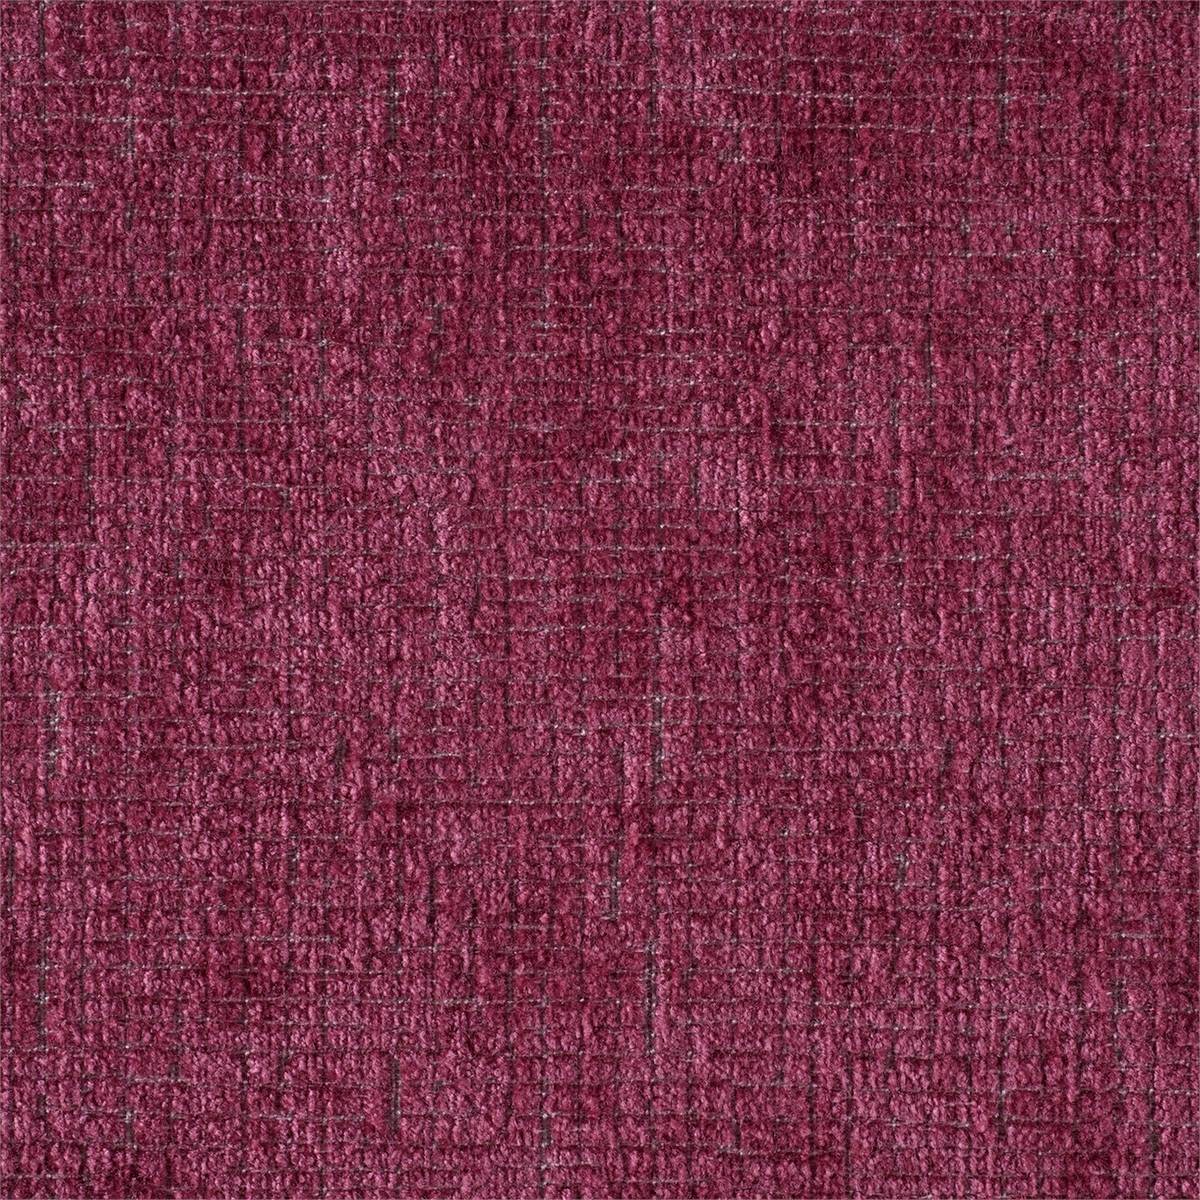 Tessella Dusky Rose Fabric by Sanderson